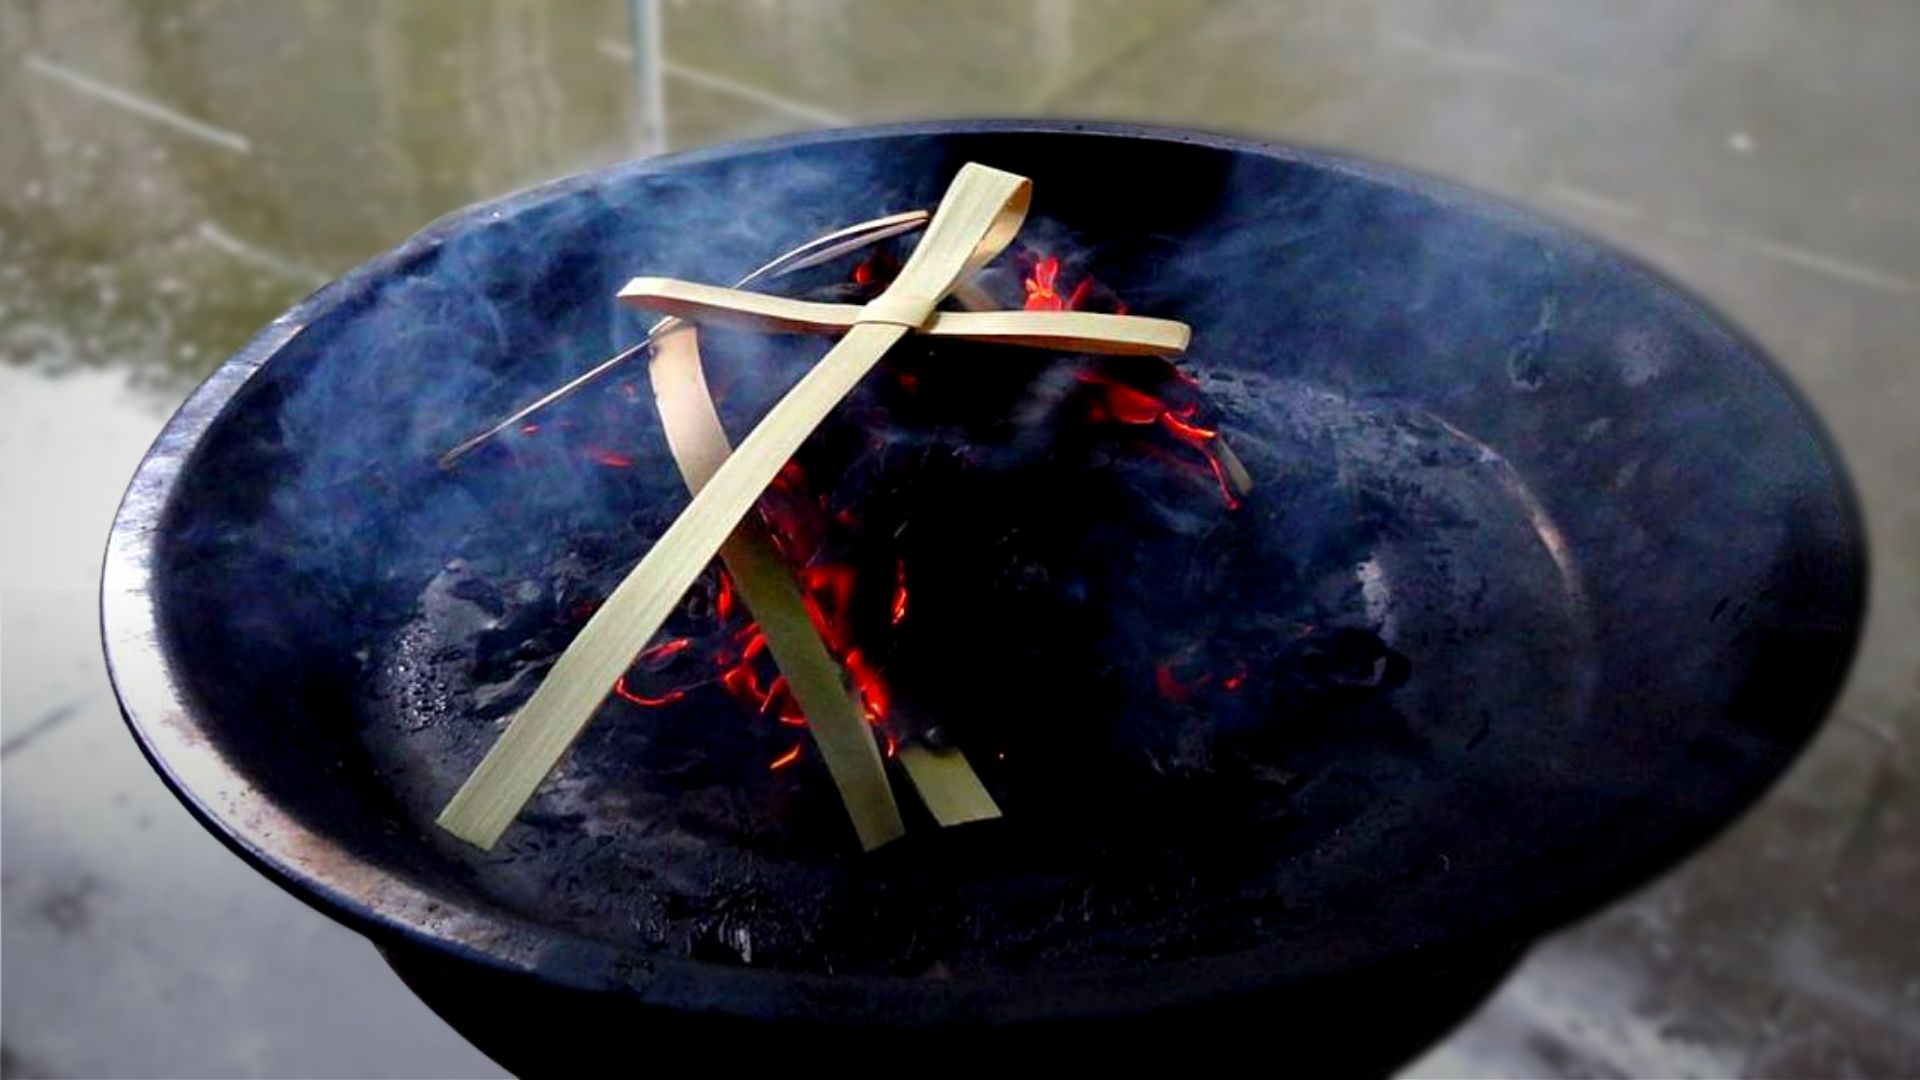 Palm Sunday crosses turing to ash on burning coals